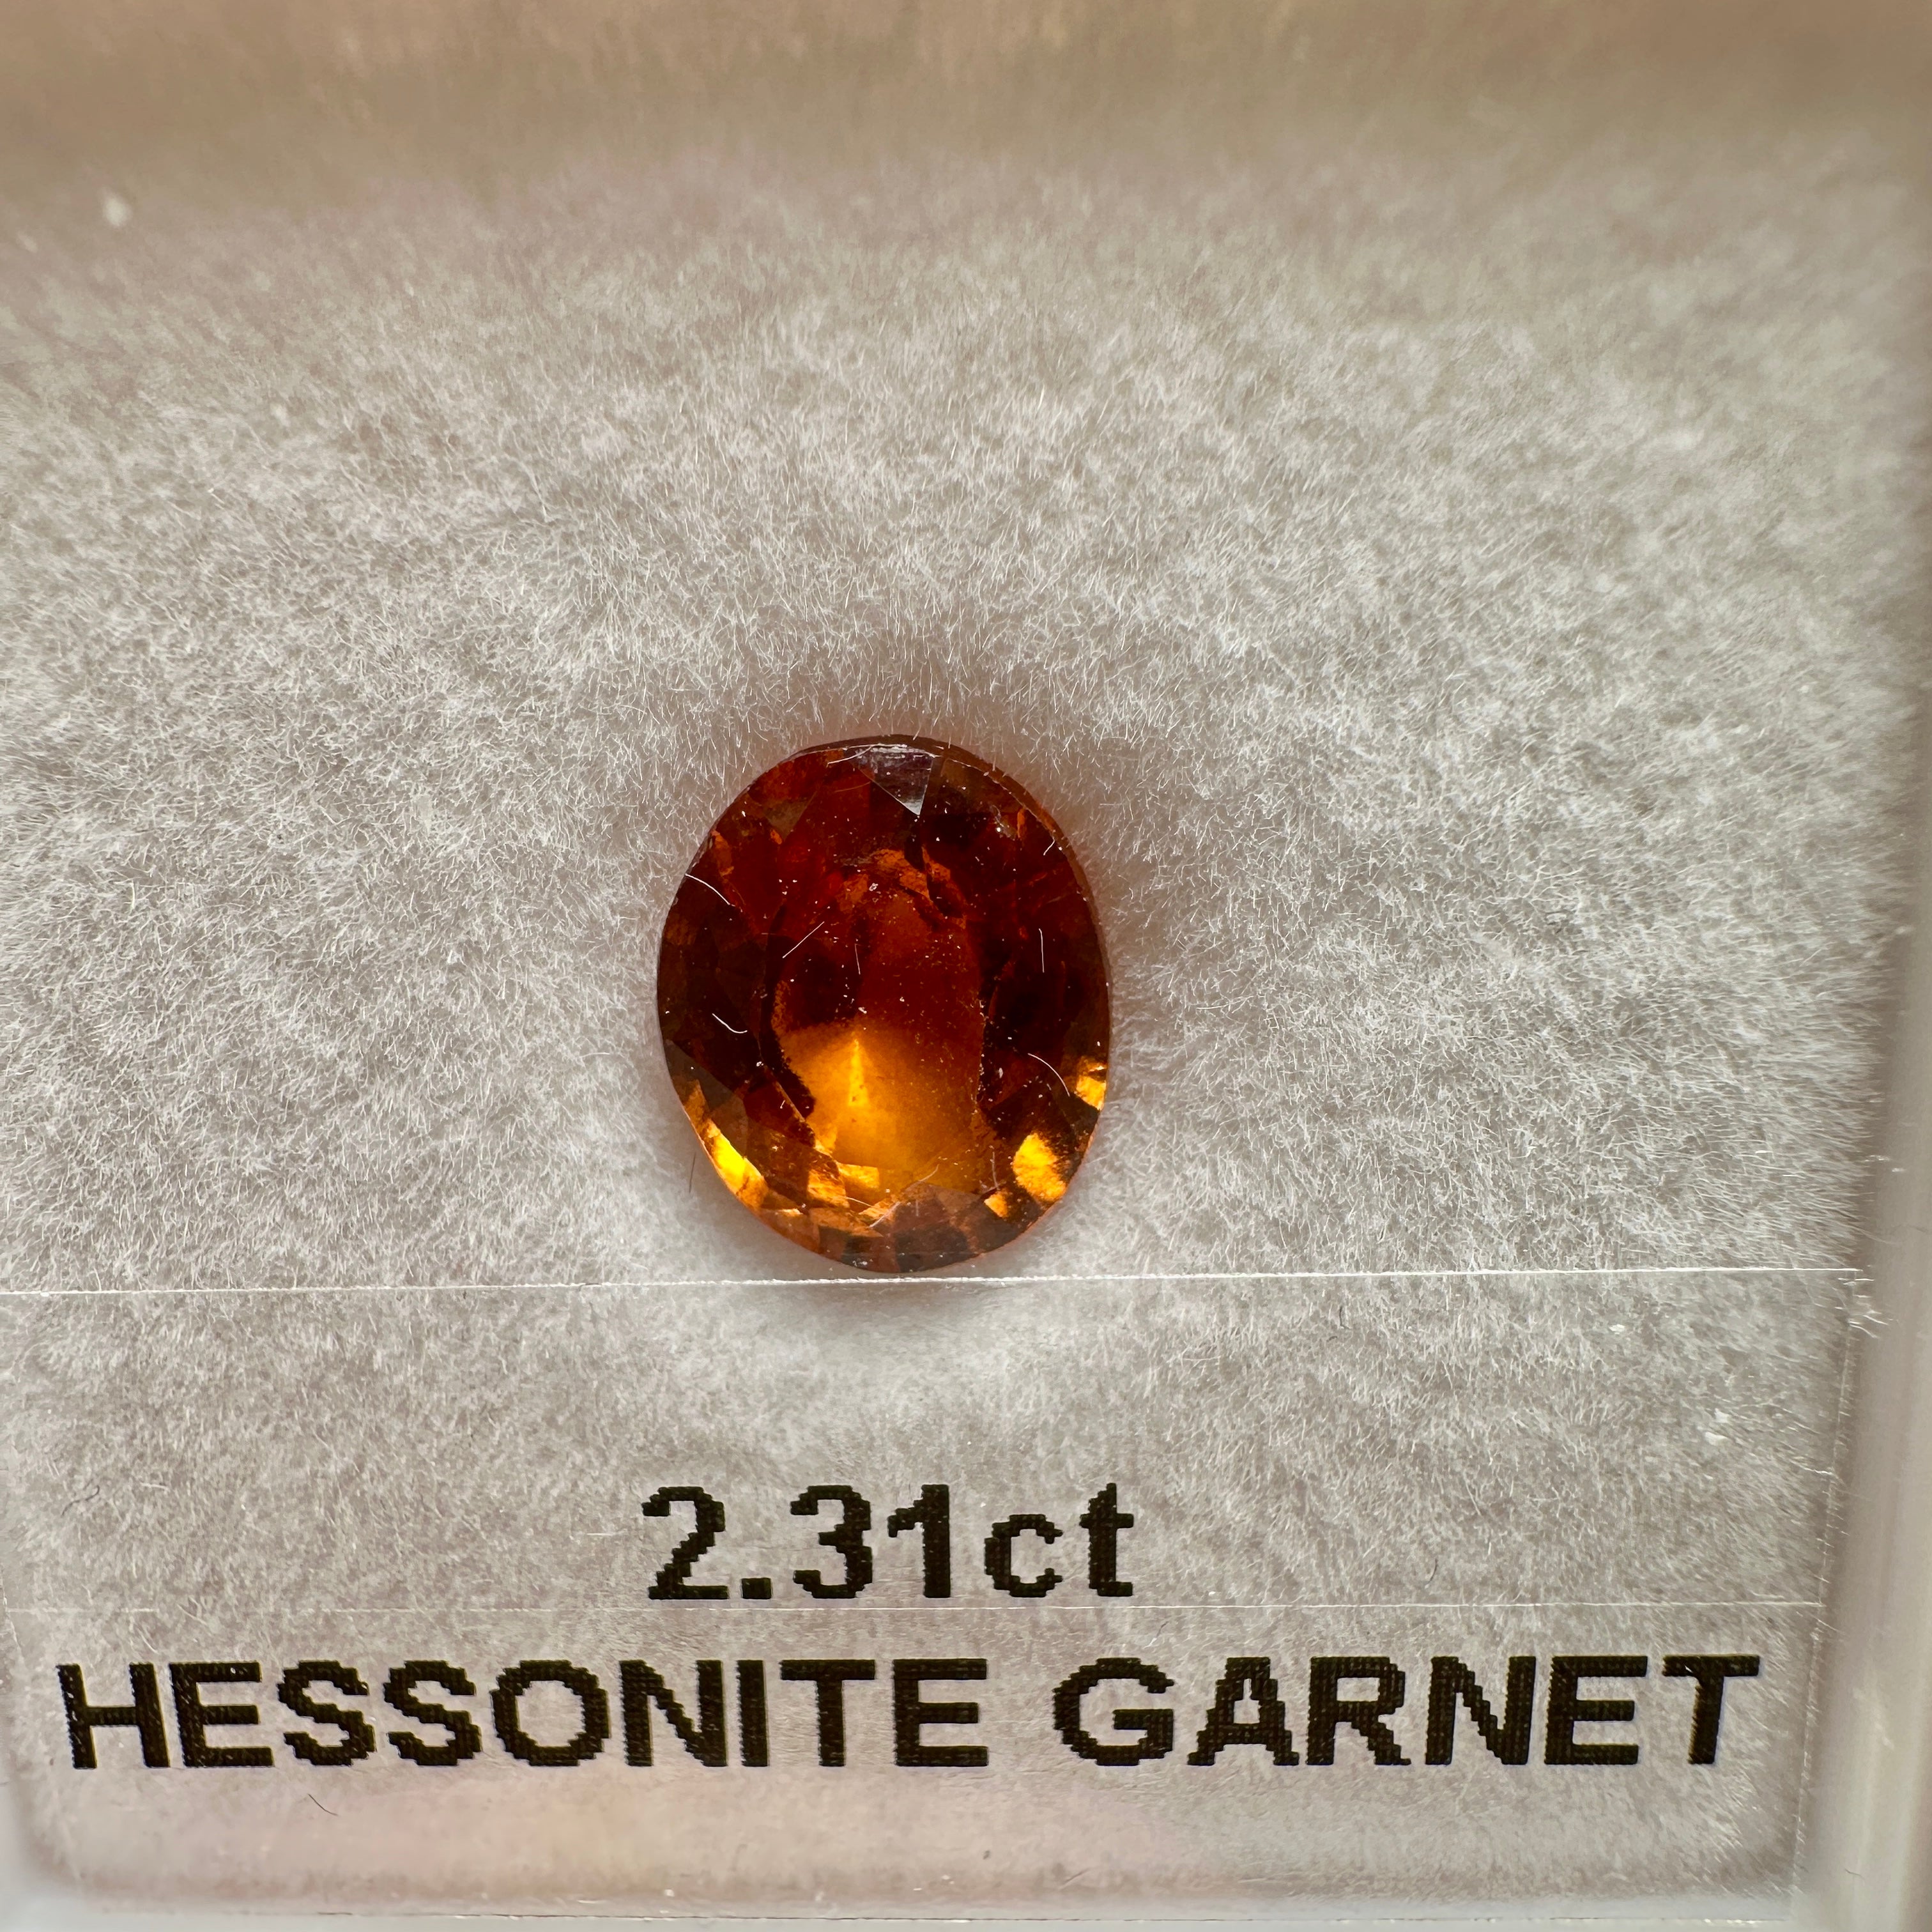 2.31ct Hessonite Garnet, Untreated Unheated, native cut